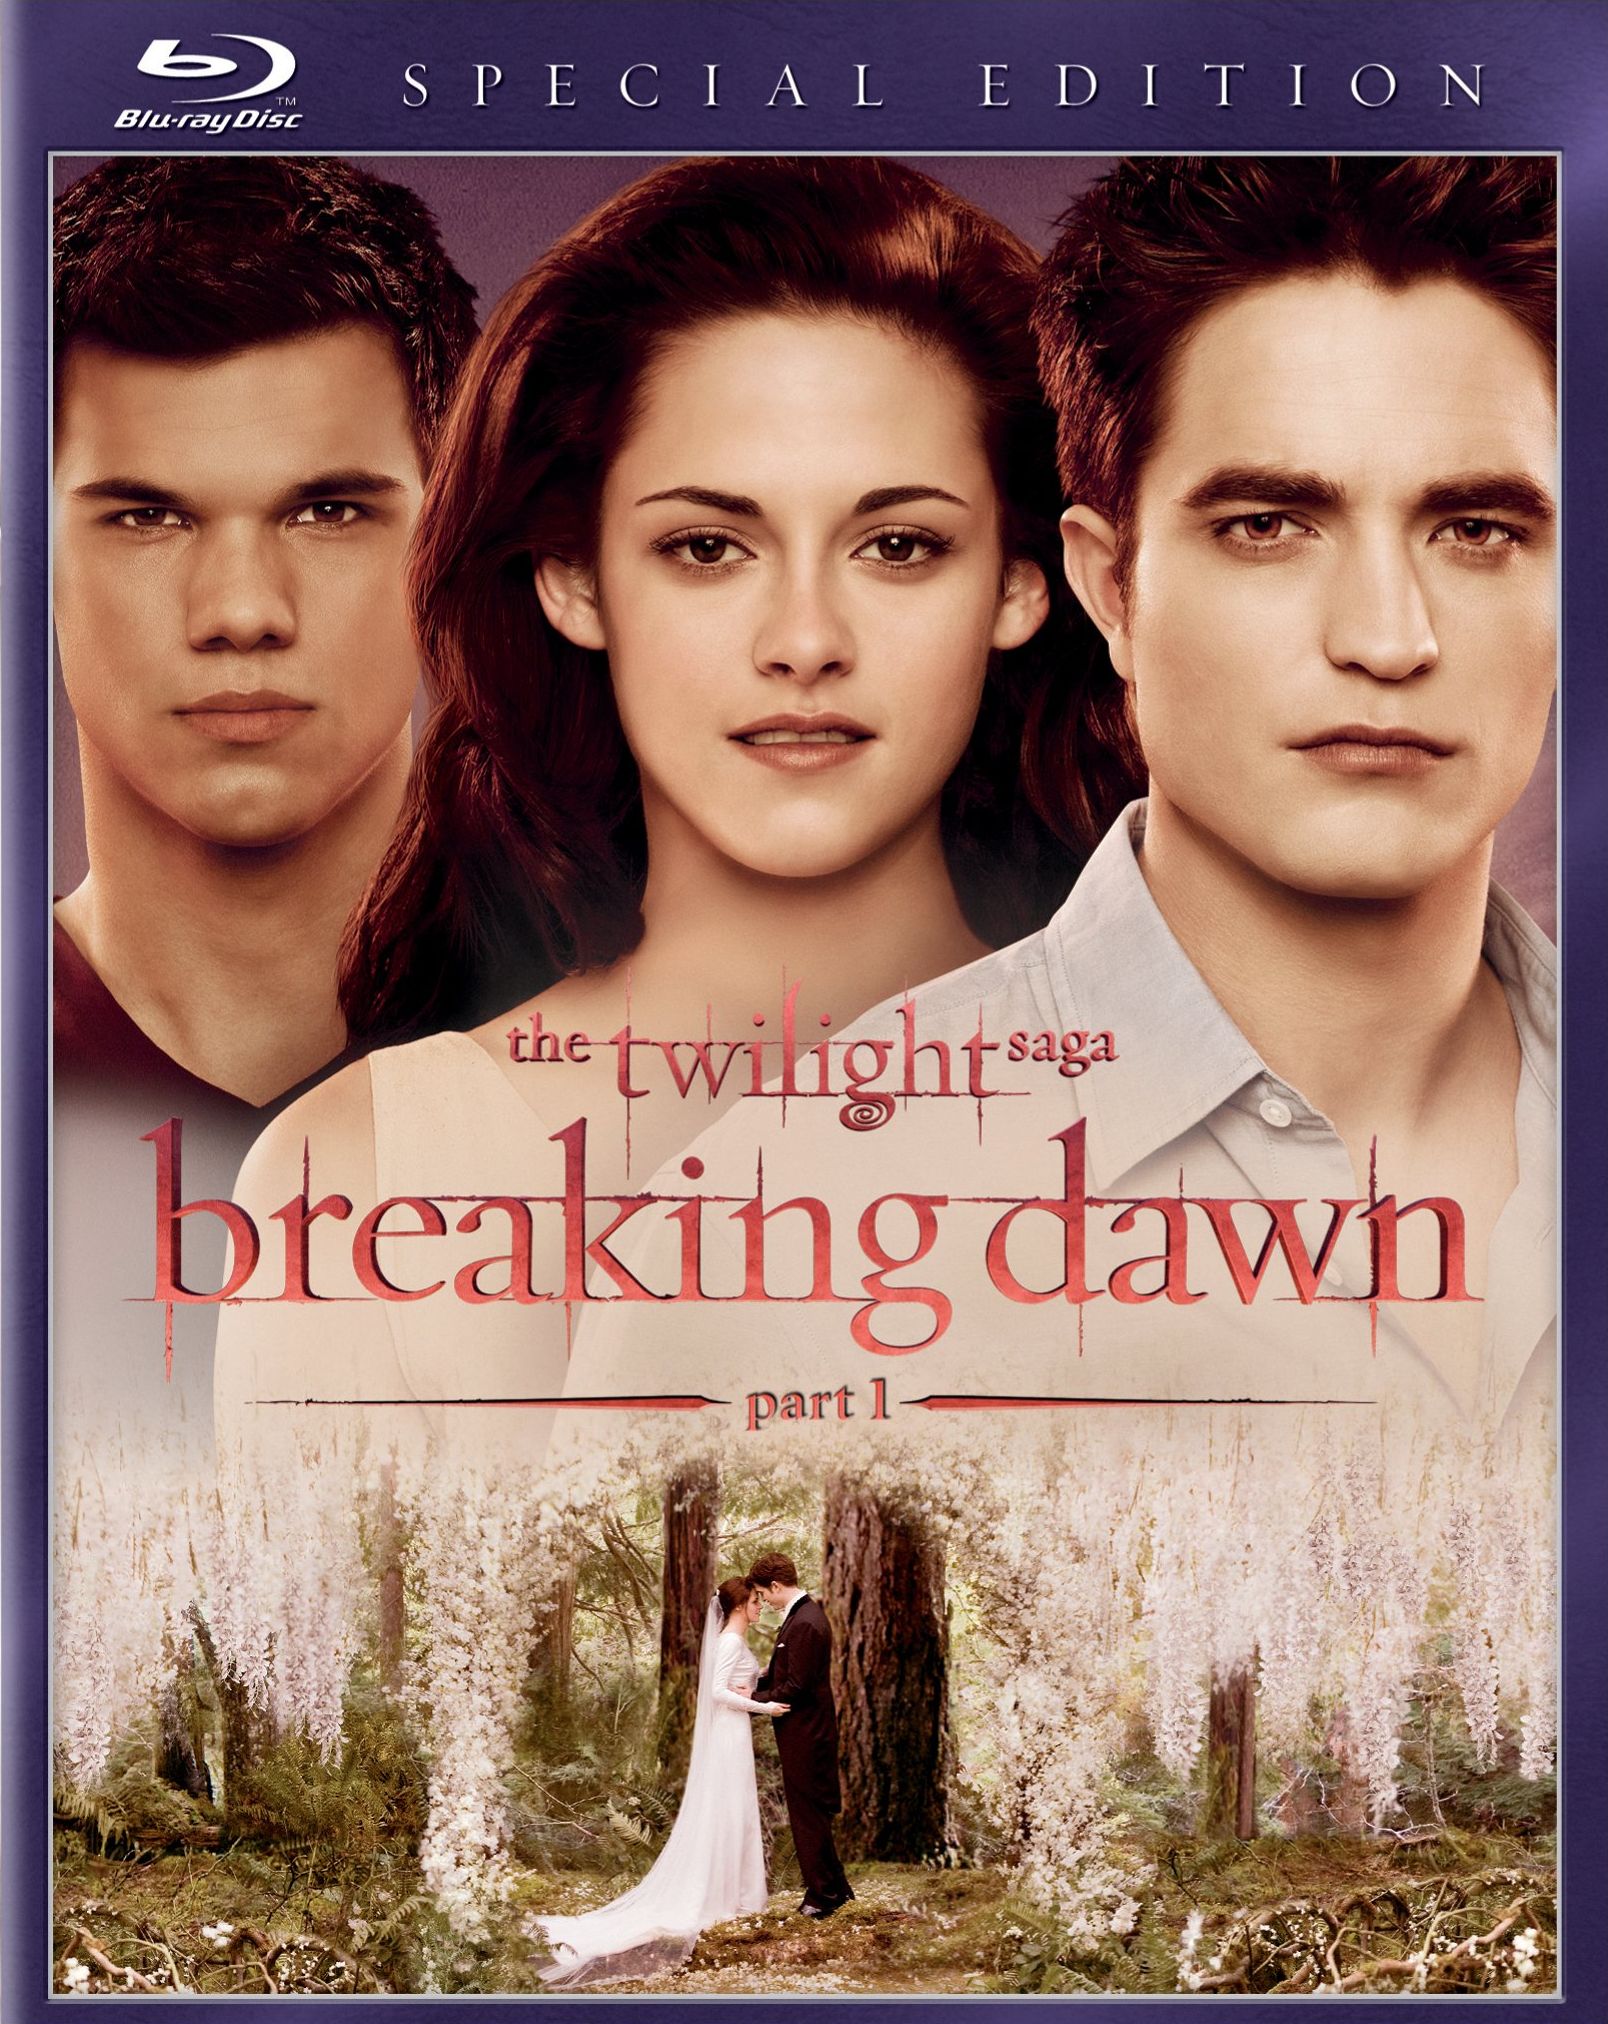 The Twilight Saga: Breaking Dawn - Part 1 DVD Release Date February 11, 2012